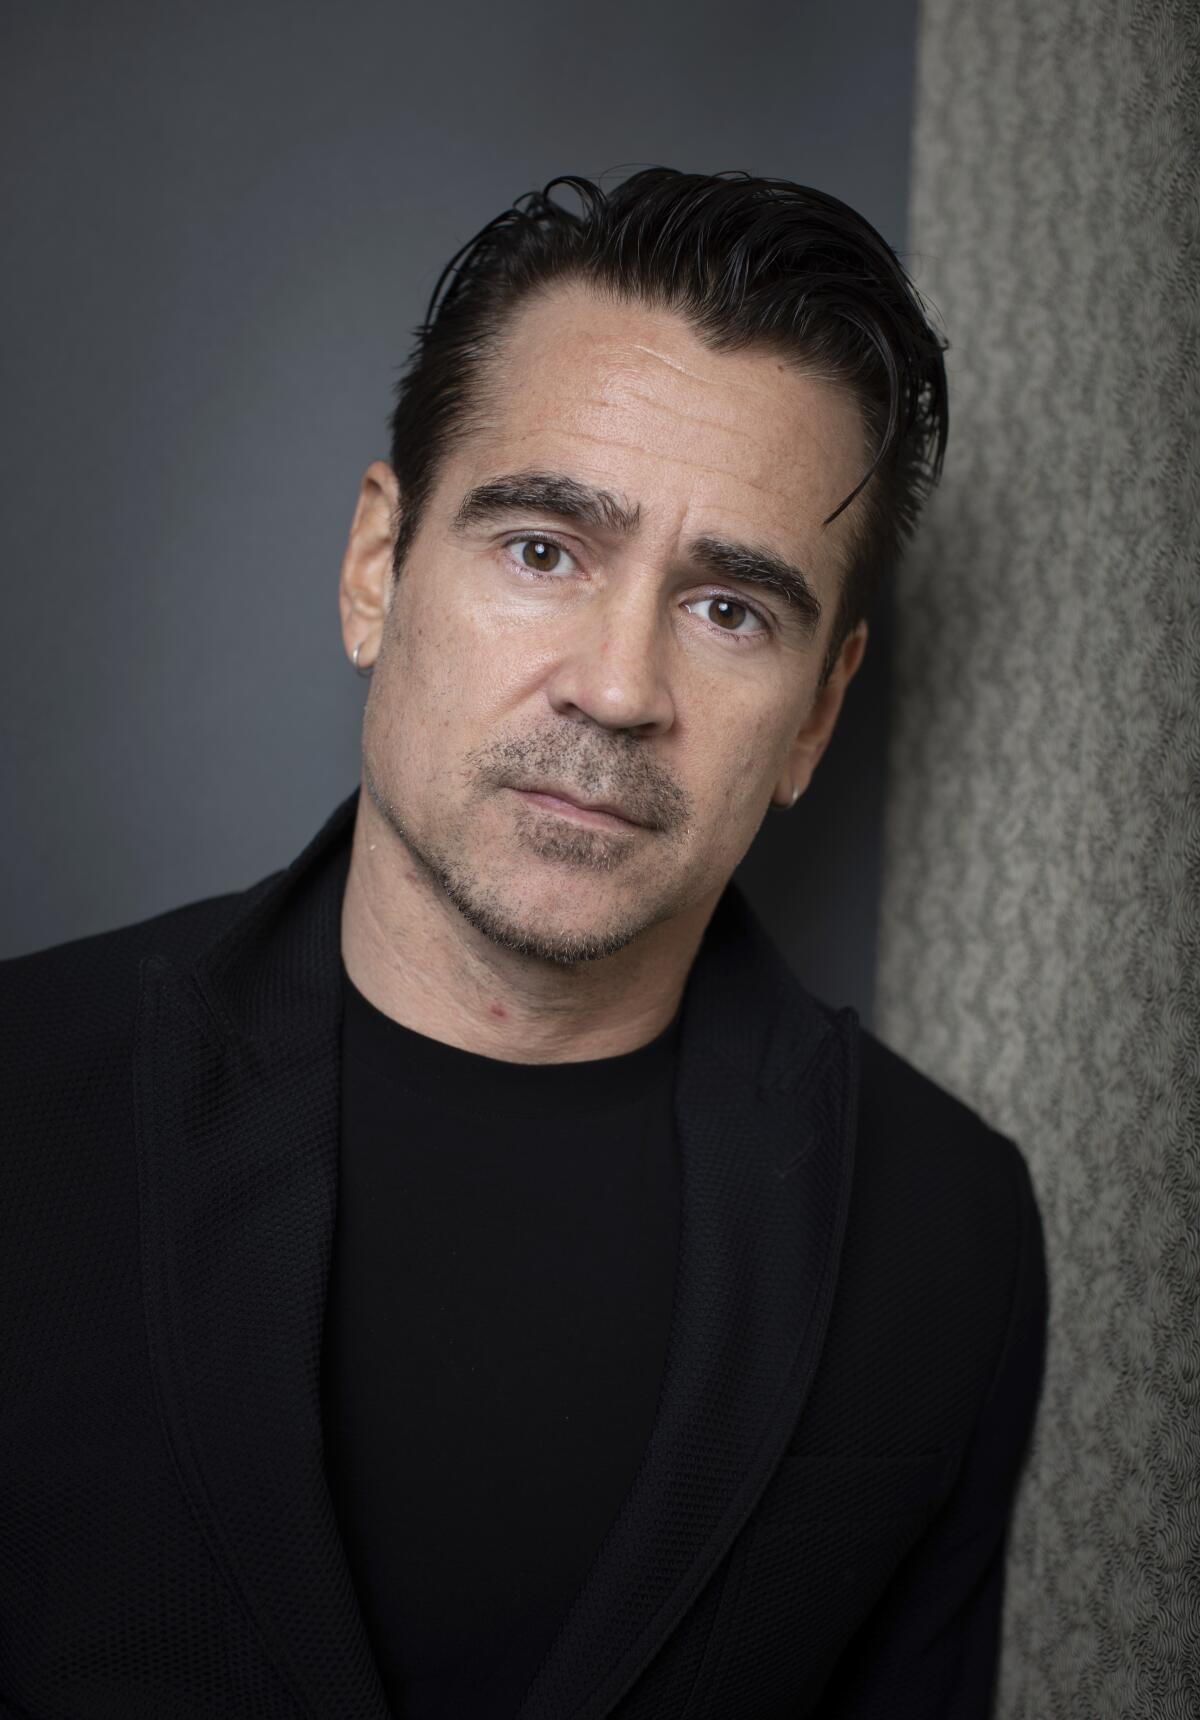 Colin Farrell wears a black sweater for a portrait.